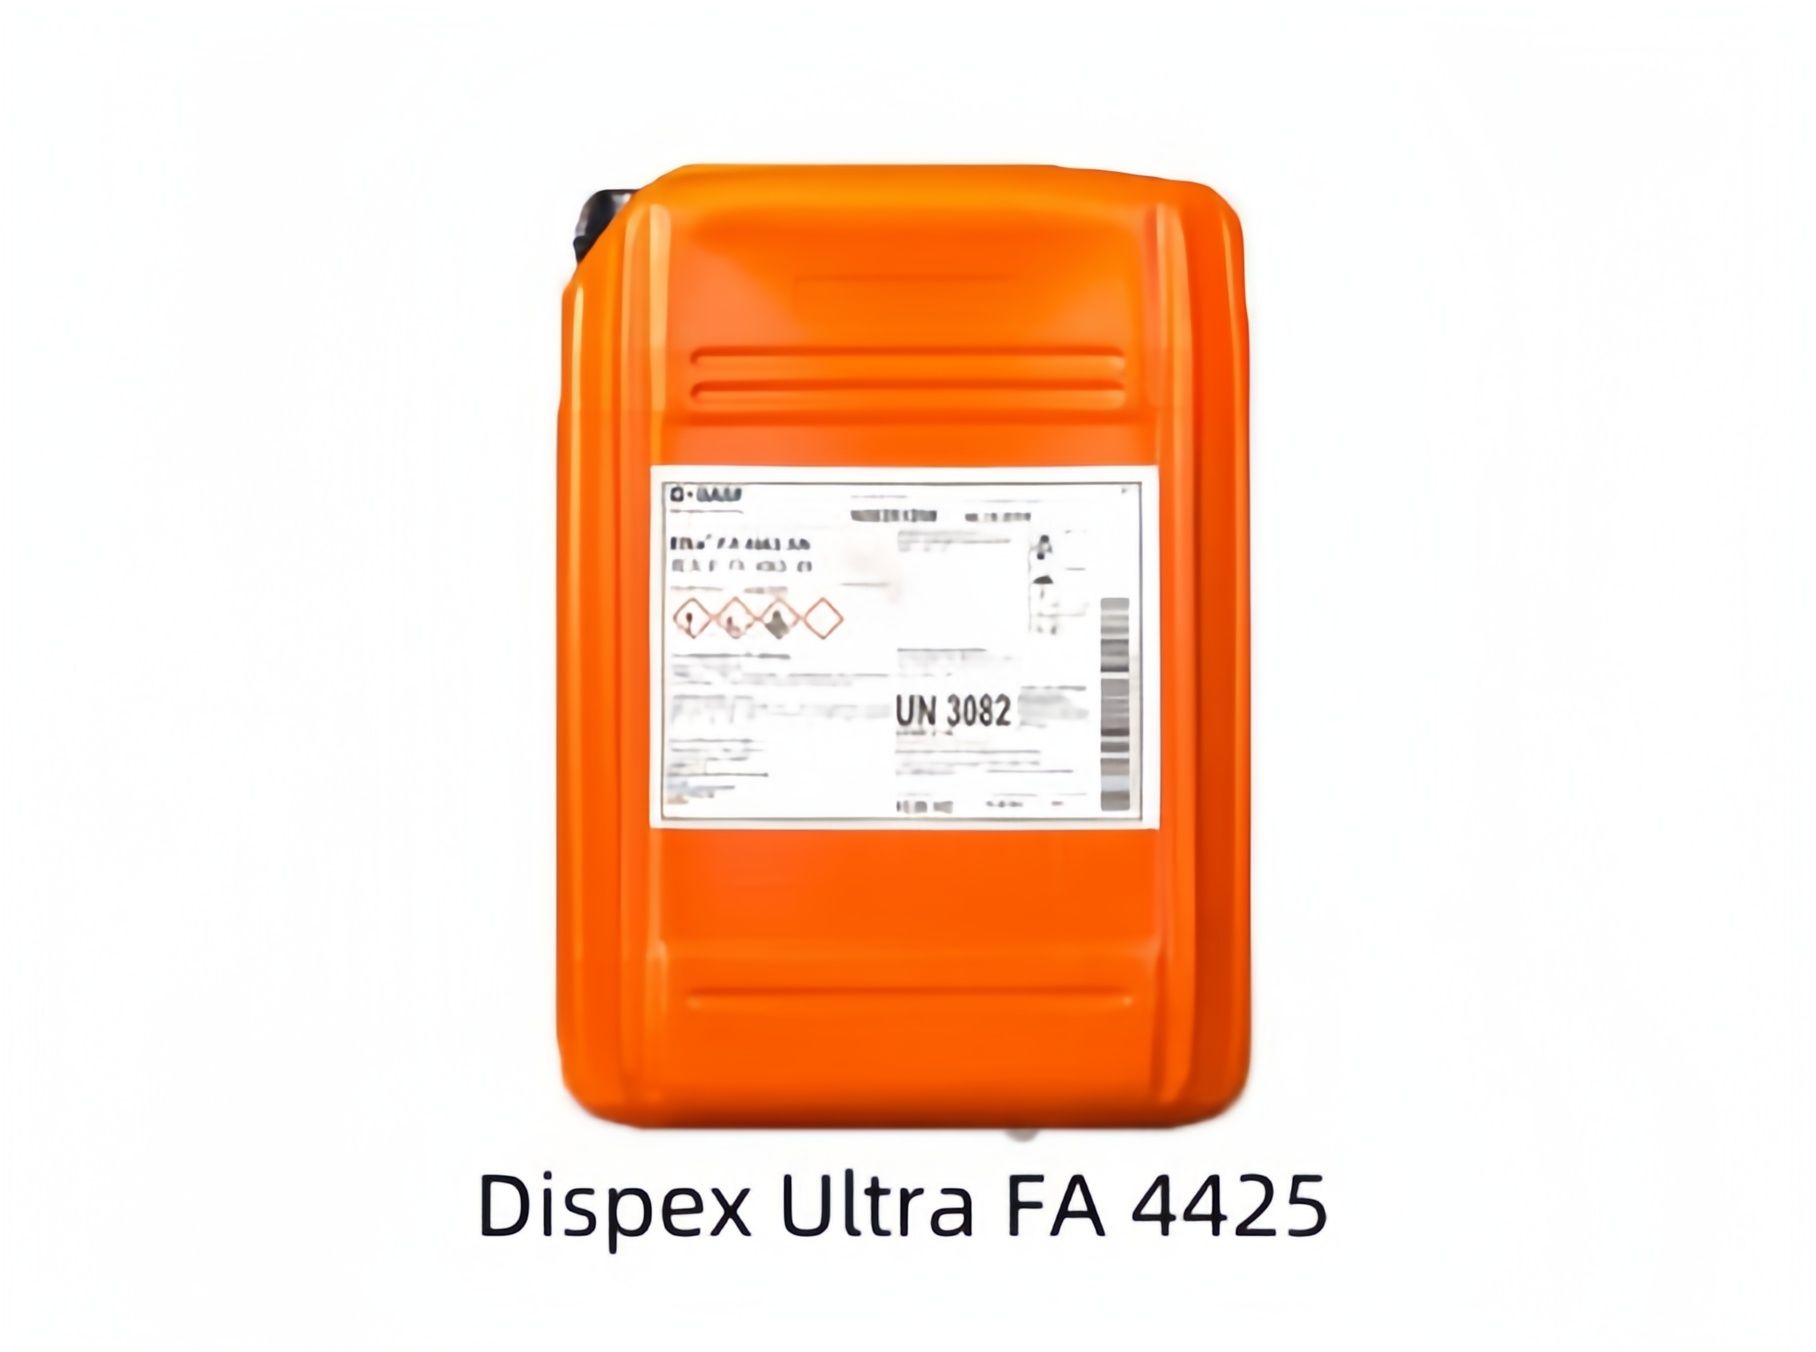 巴斯夫分散剂Dispex Ultra FA 4425